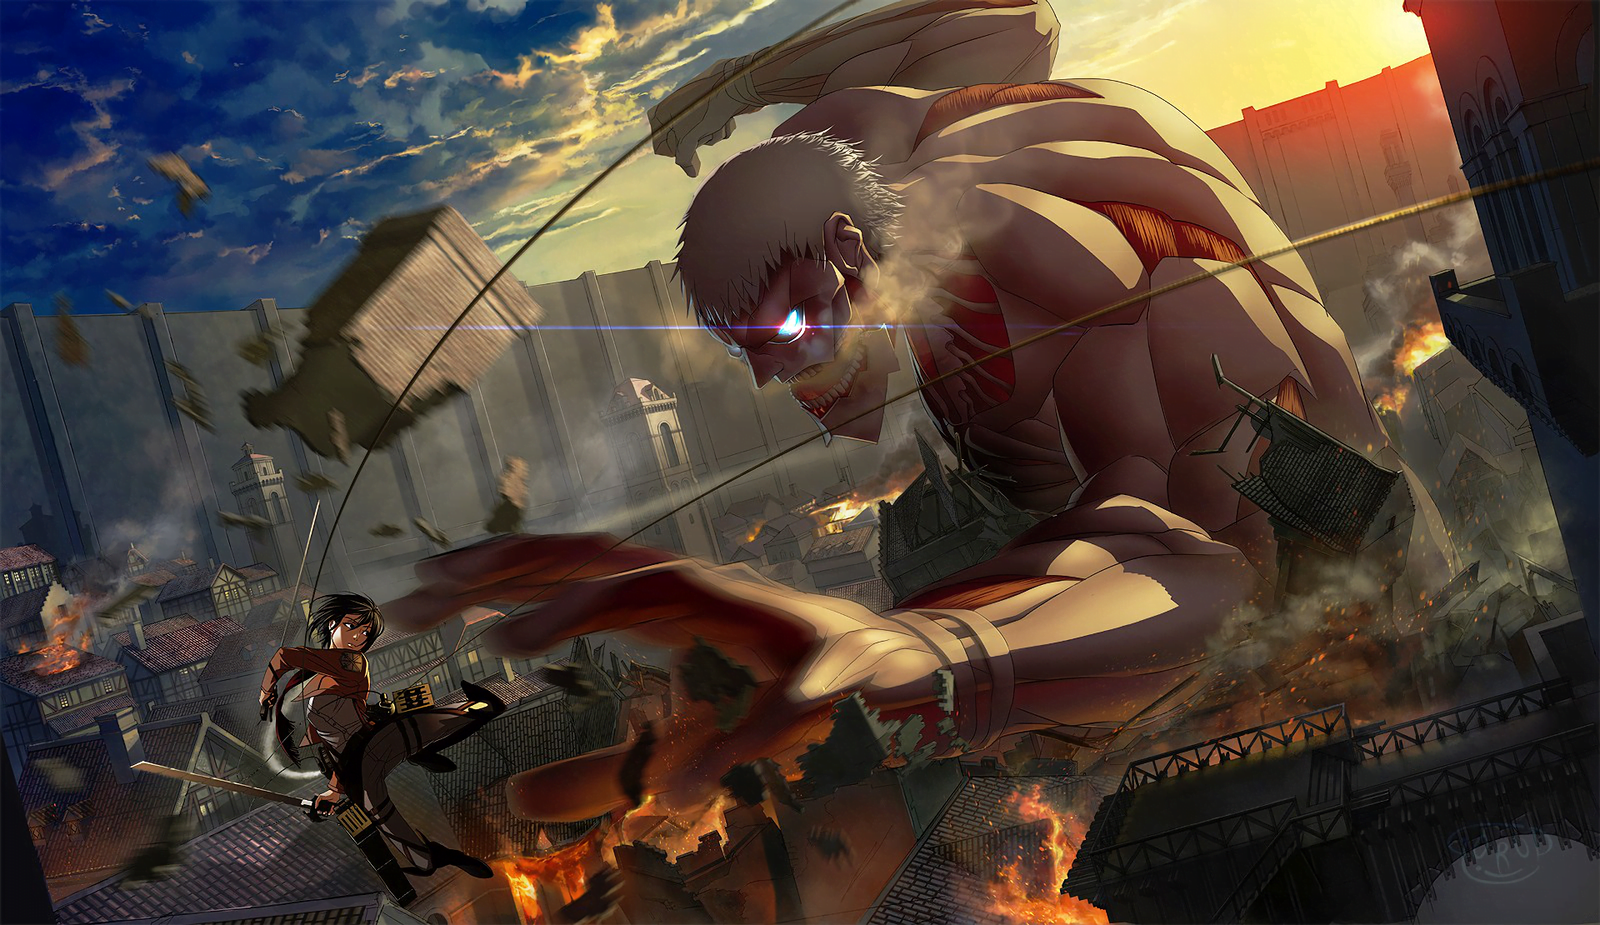 Mikasa Fighting With Armored Titan